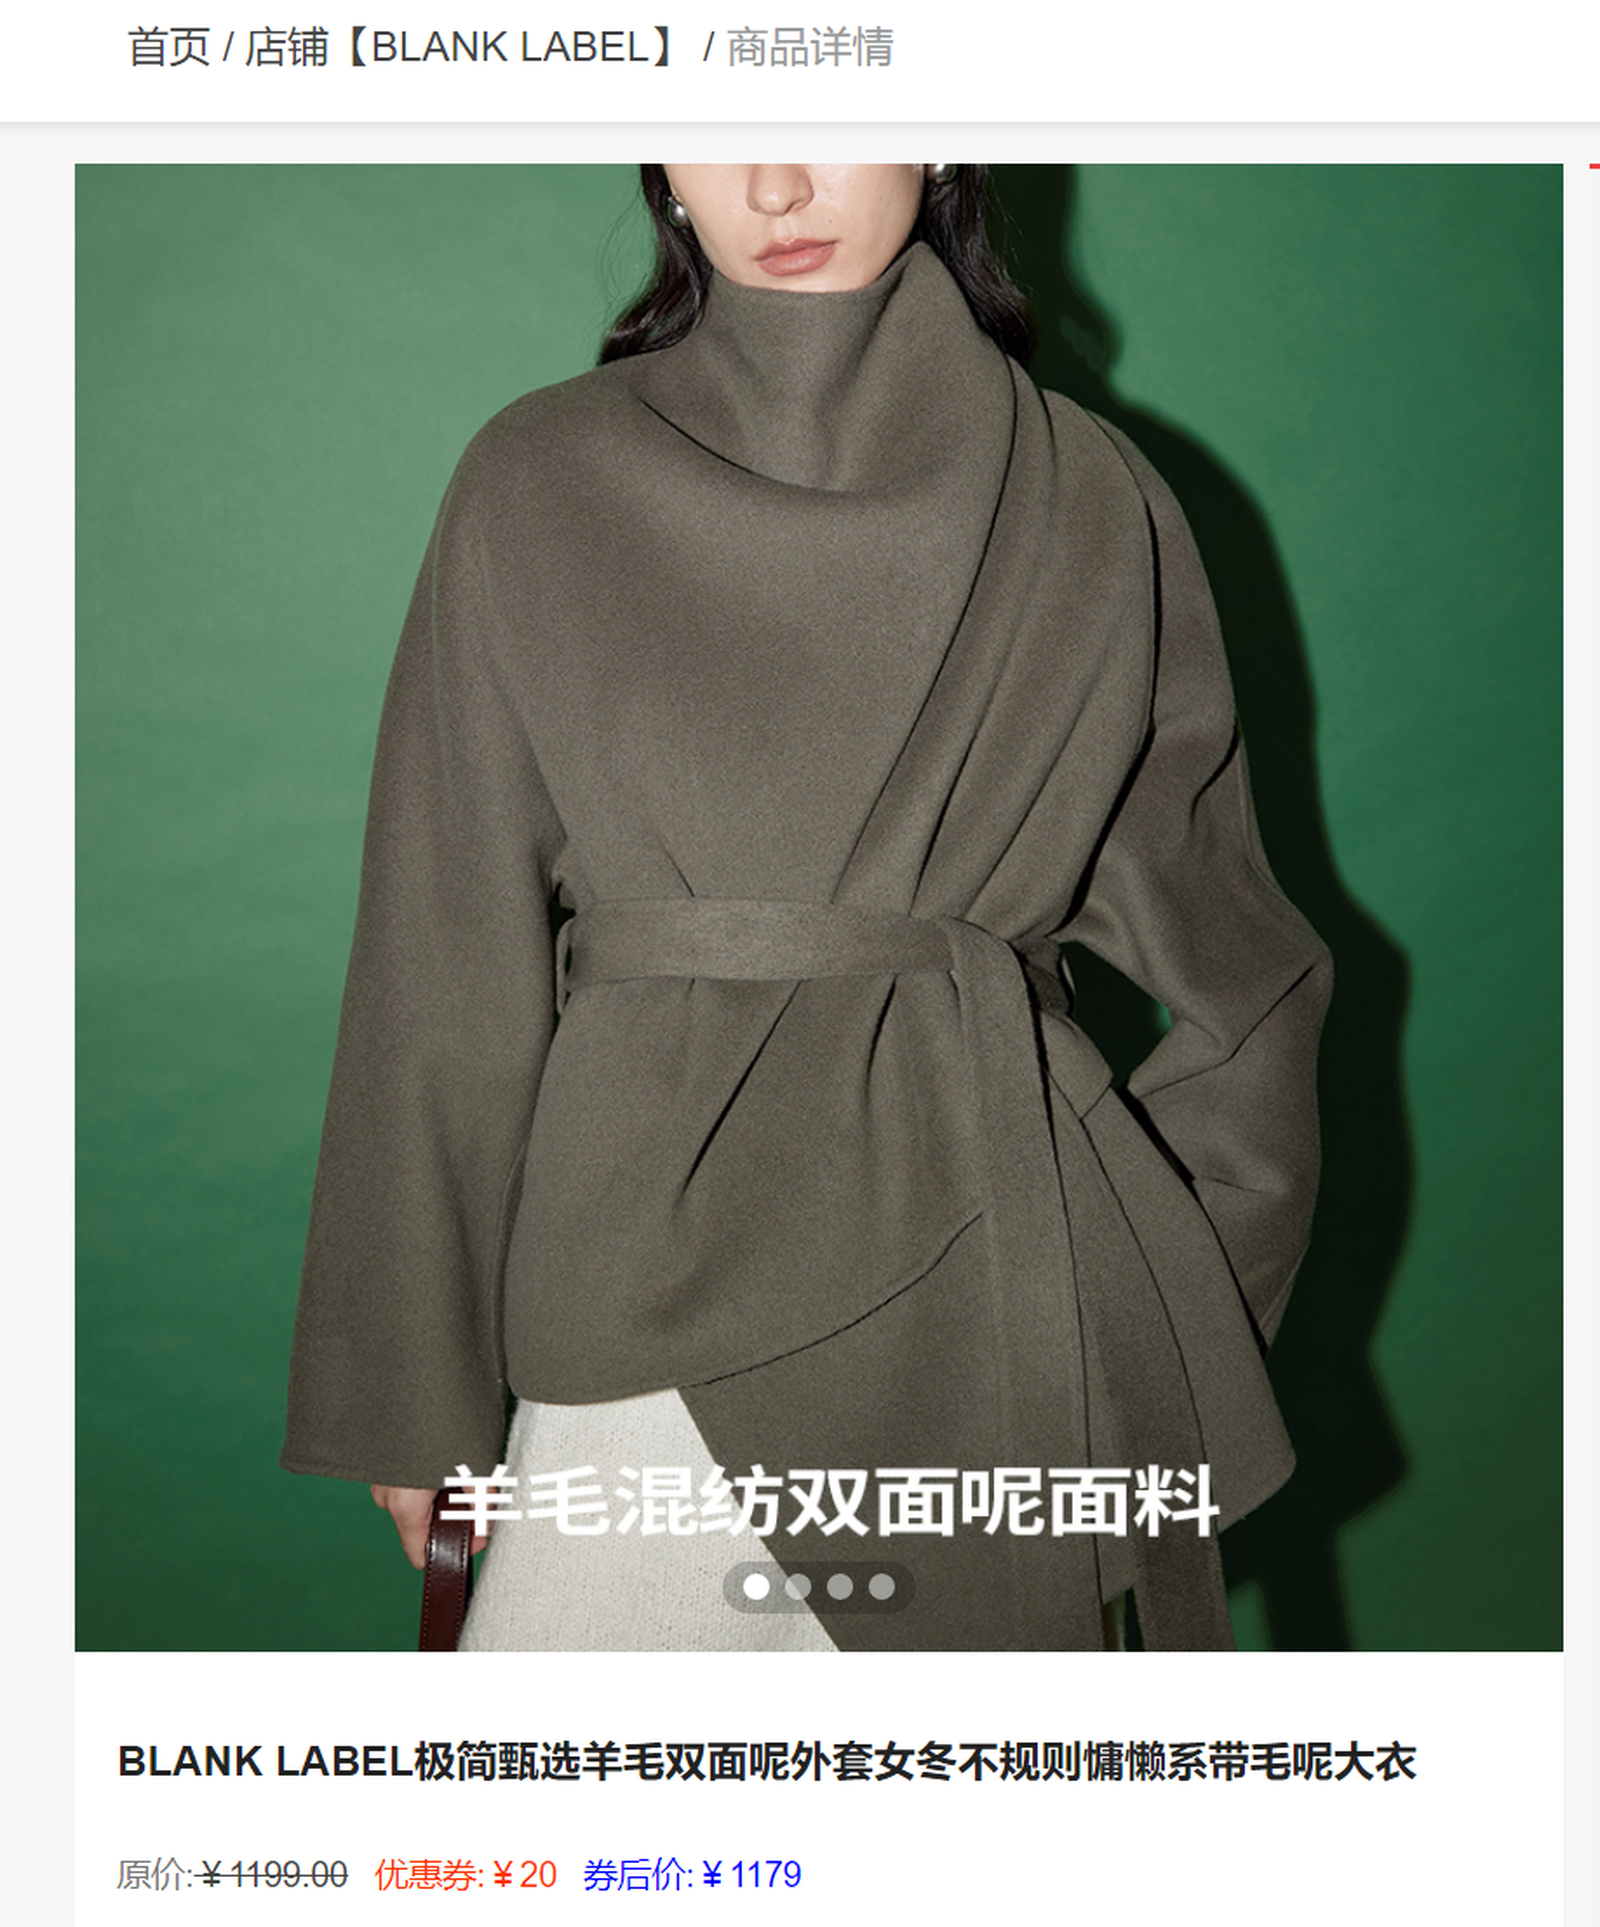 Chinese wholesale manufacturer's website, screengrab taken on 1/12/23